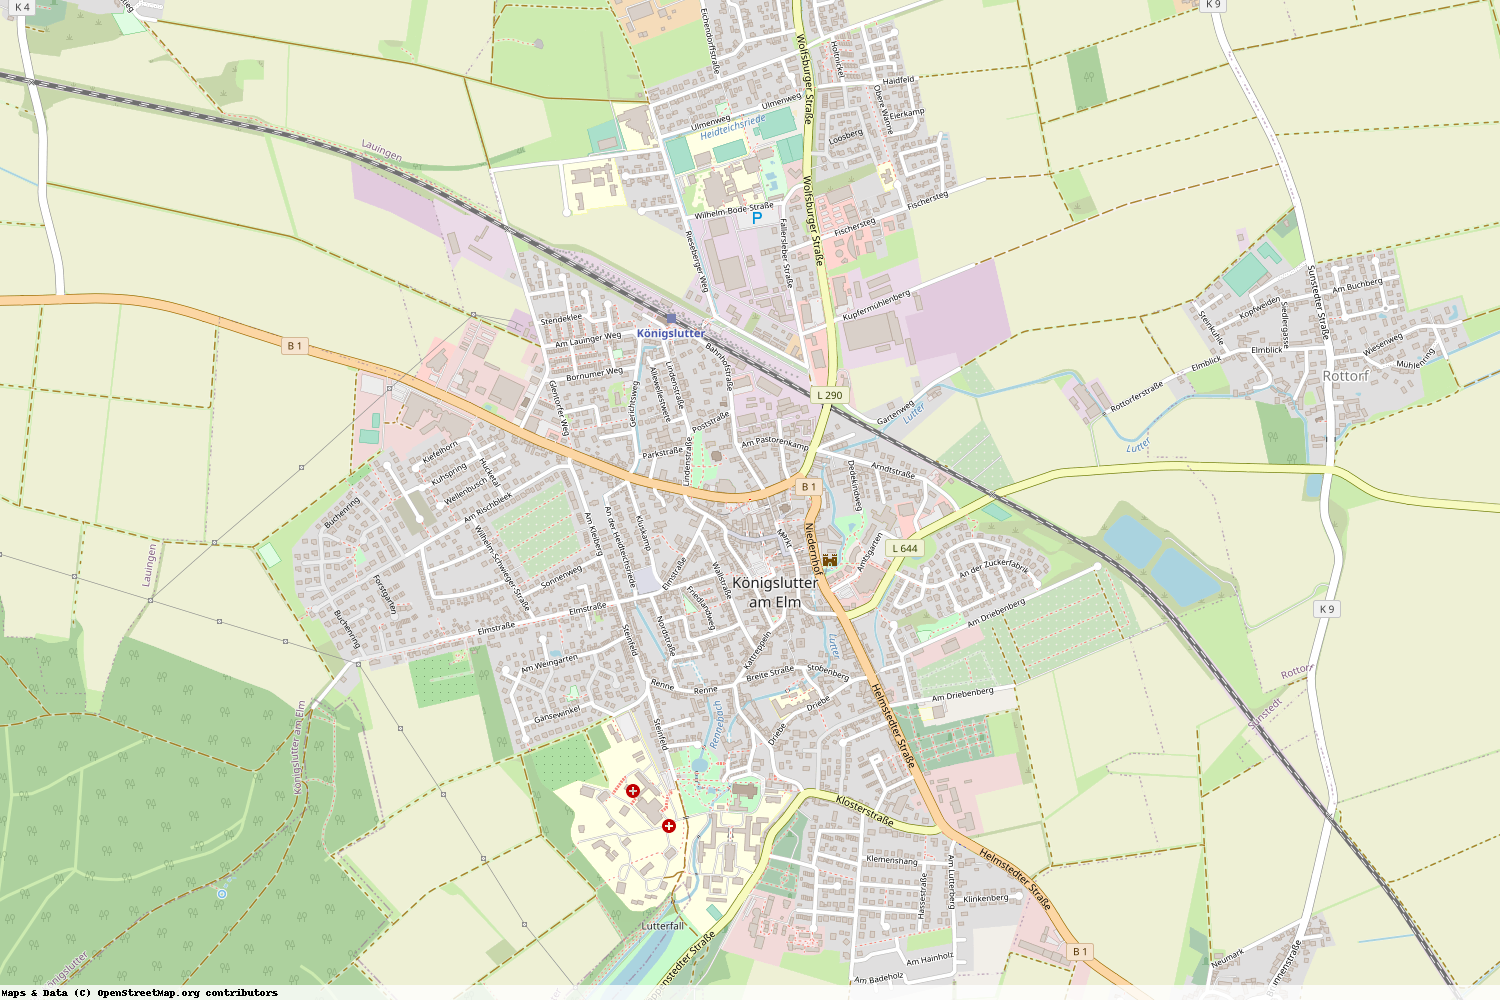 Ist gerade Stromausfall in Niedersachsen - Helmstedt - Königslutter am Elm?